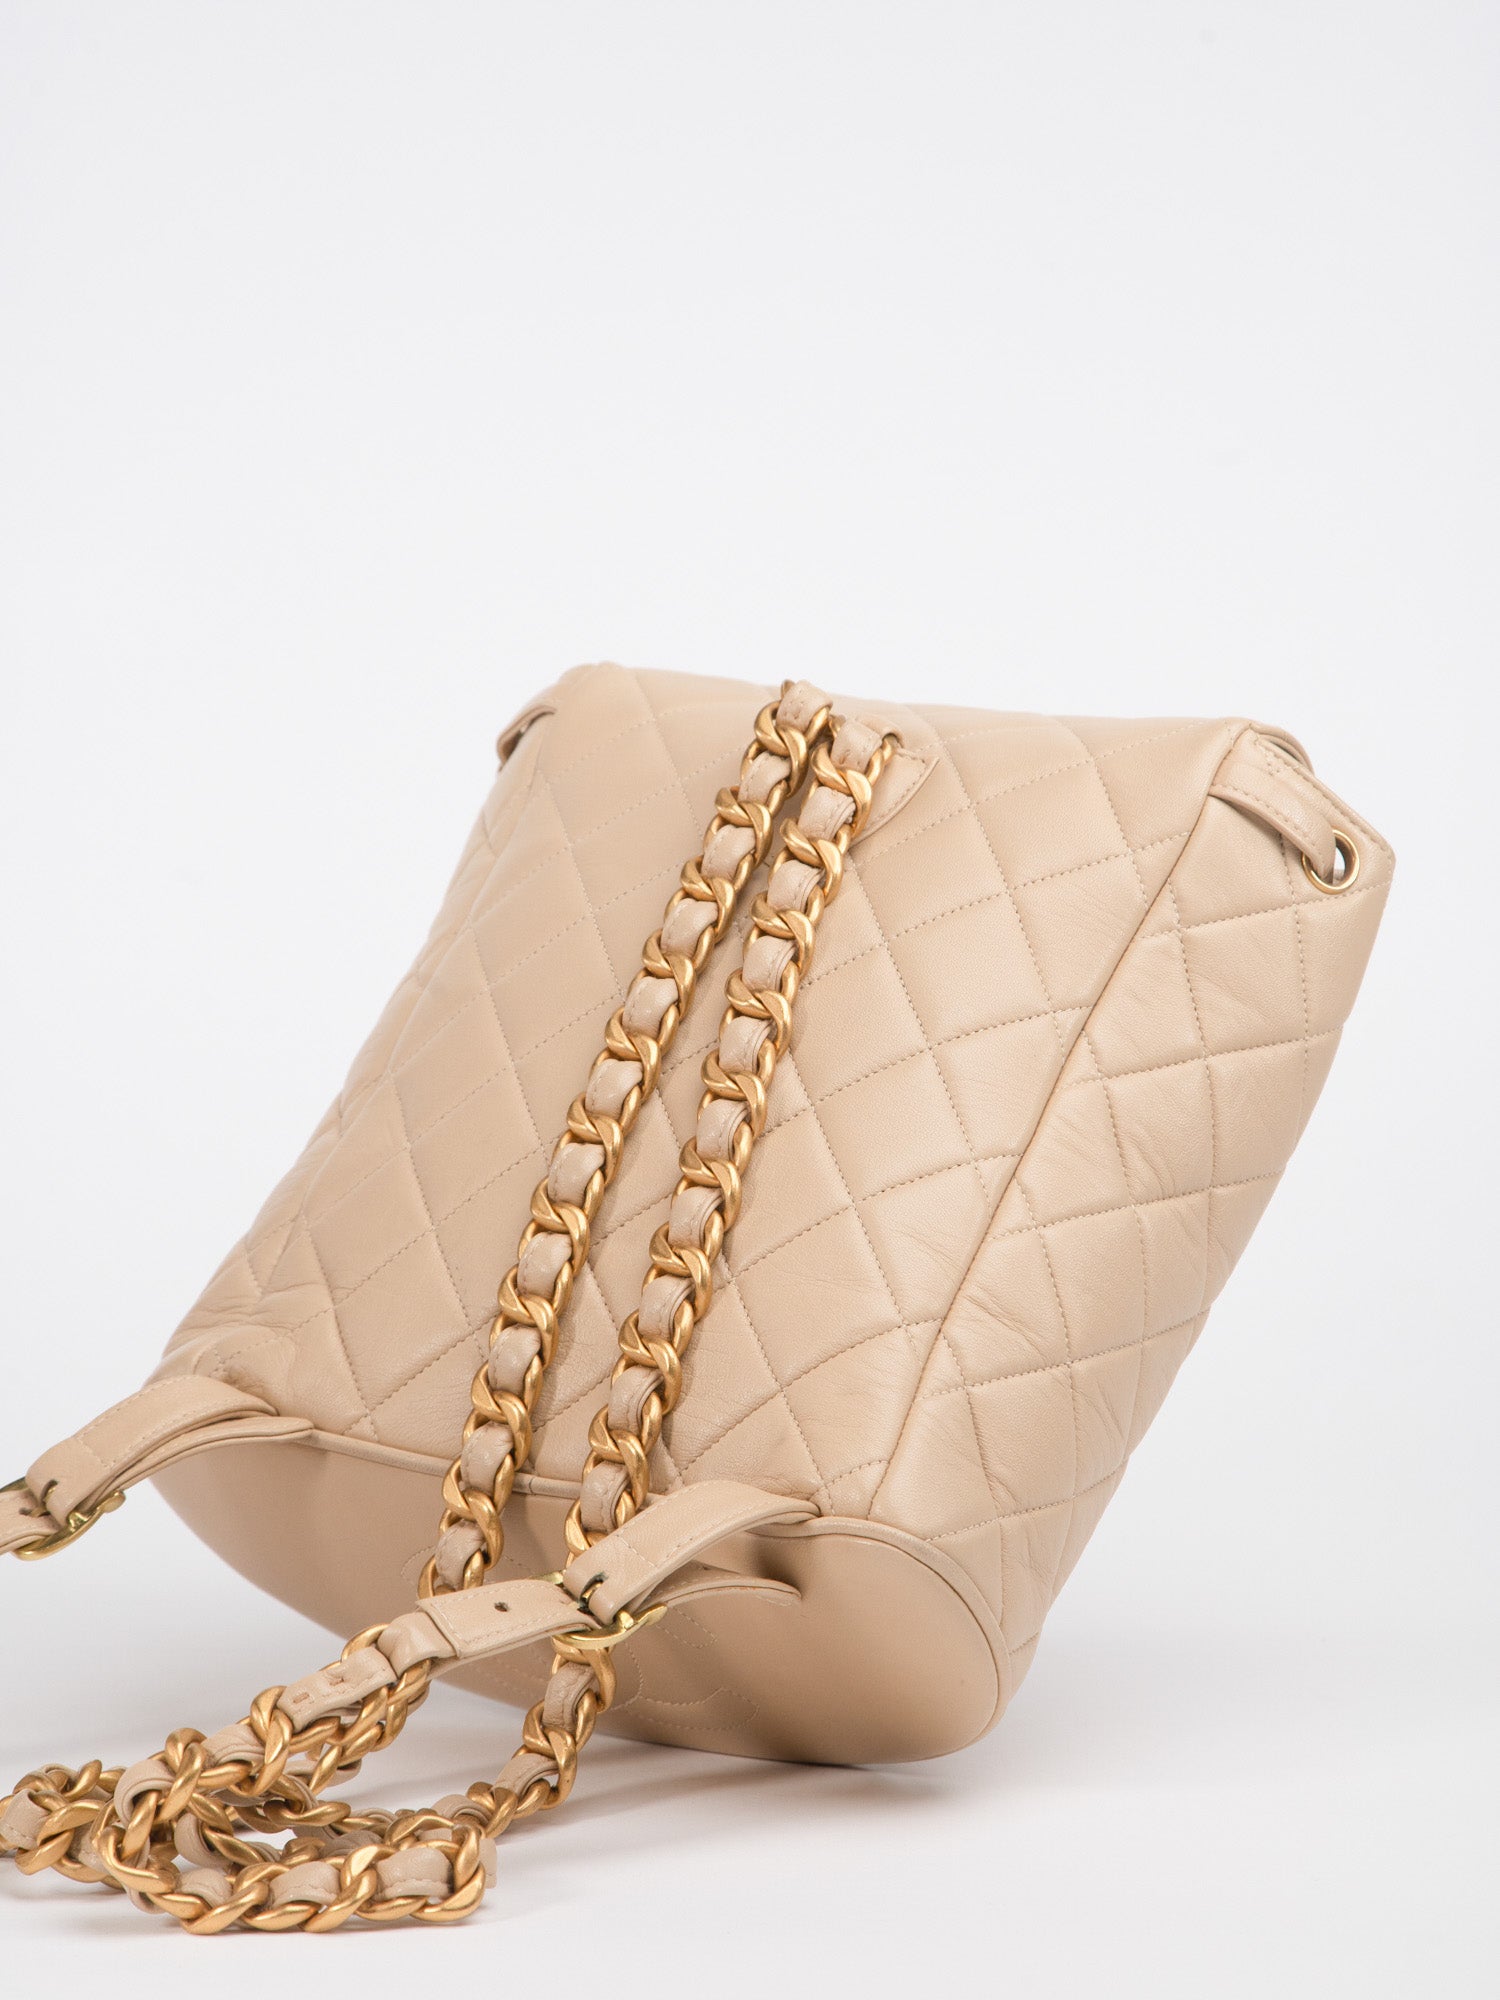 Vintage Chanel 2.55 Lambskin Cream Leather Quilted Shoulder Bag